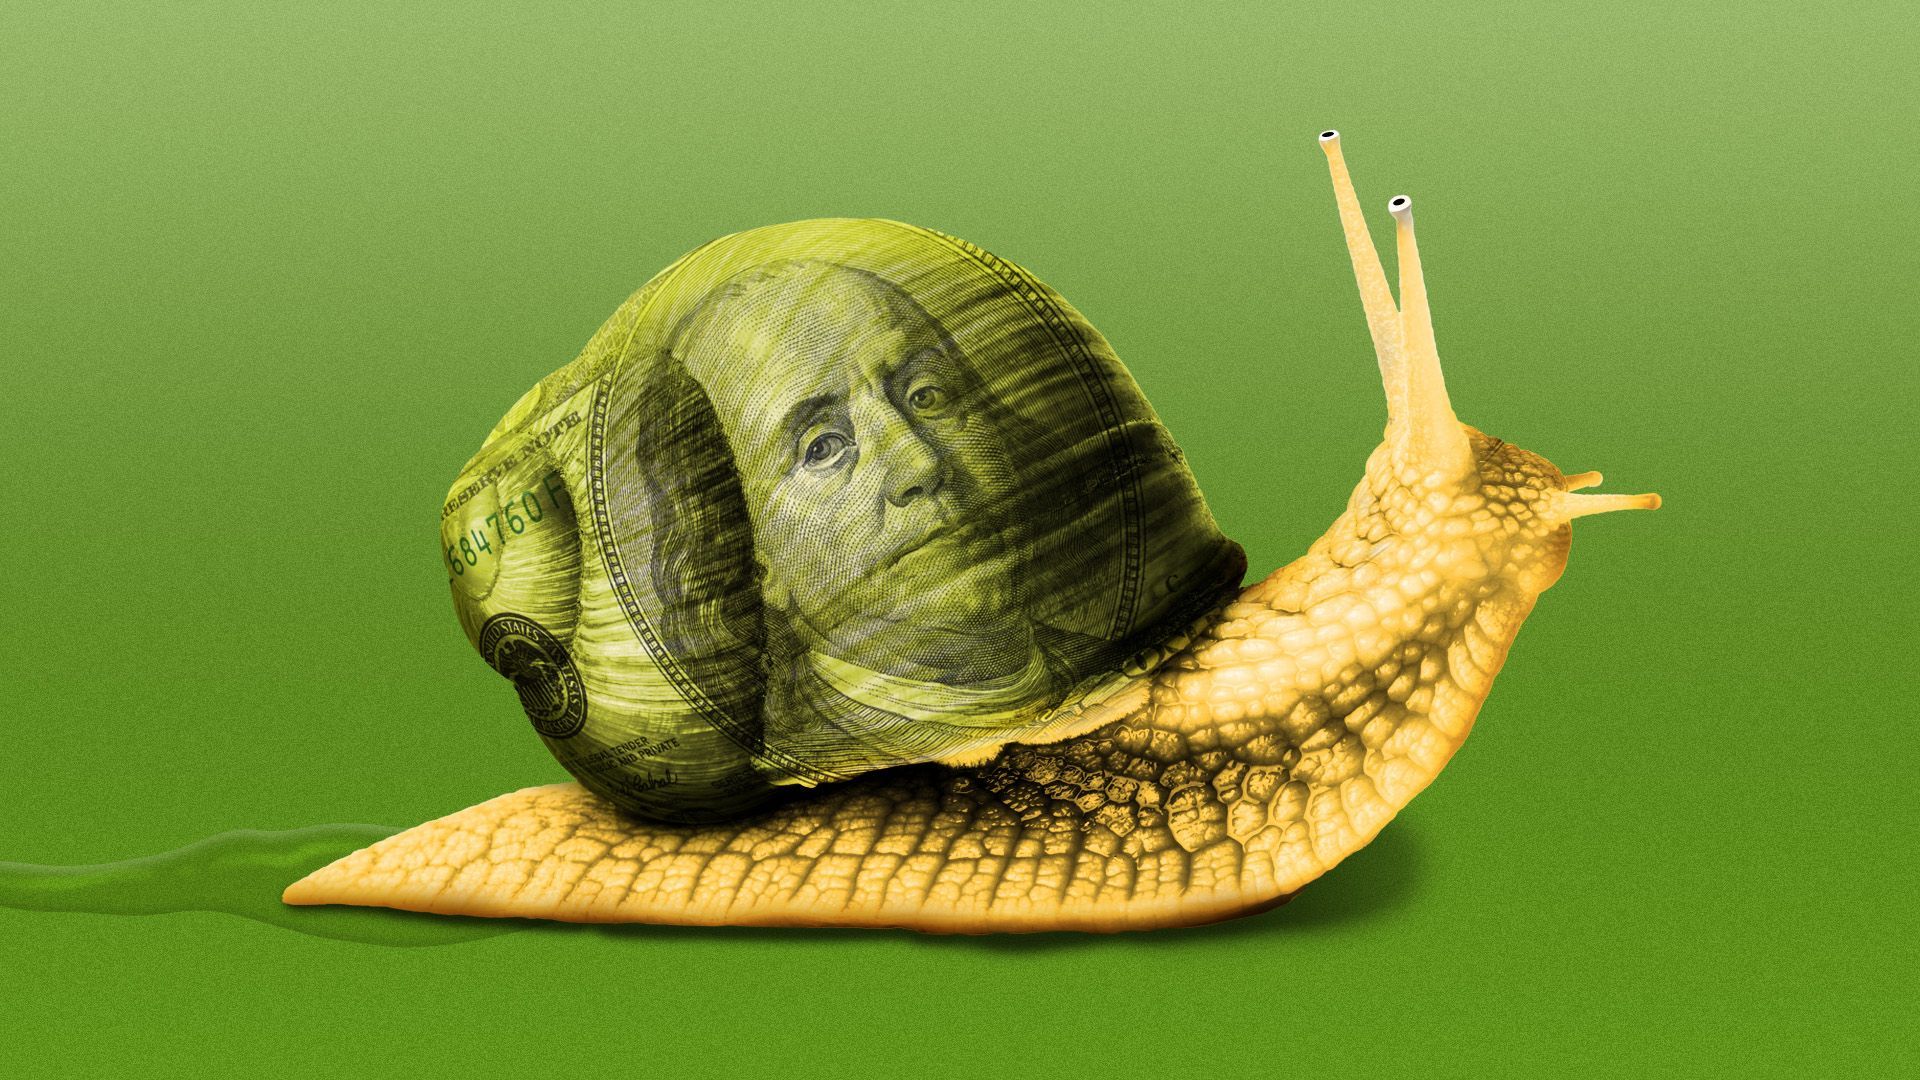 Illustration of a slug with a hundred dollar shaped shell